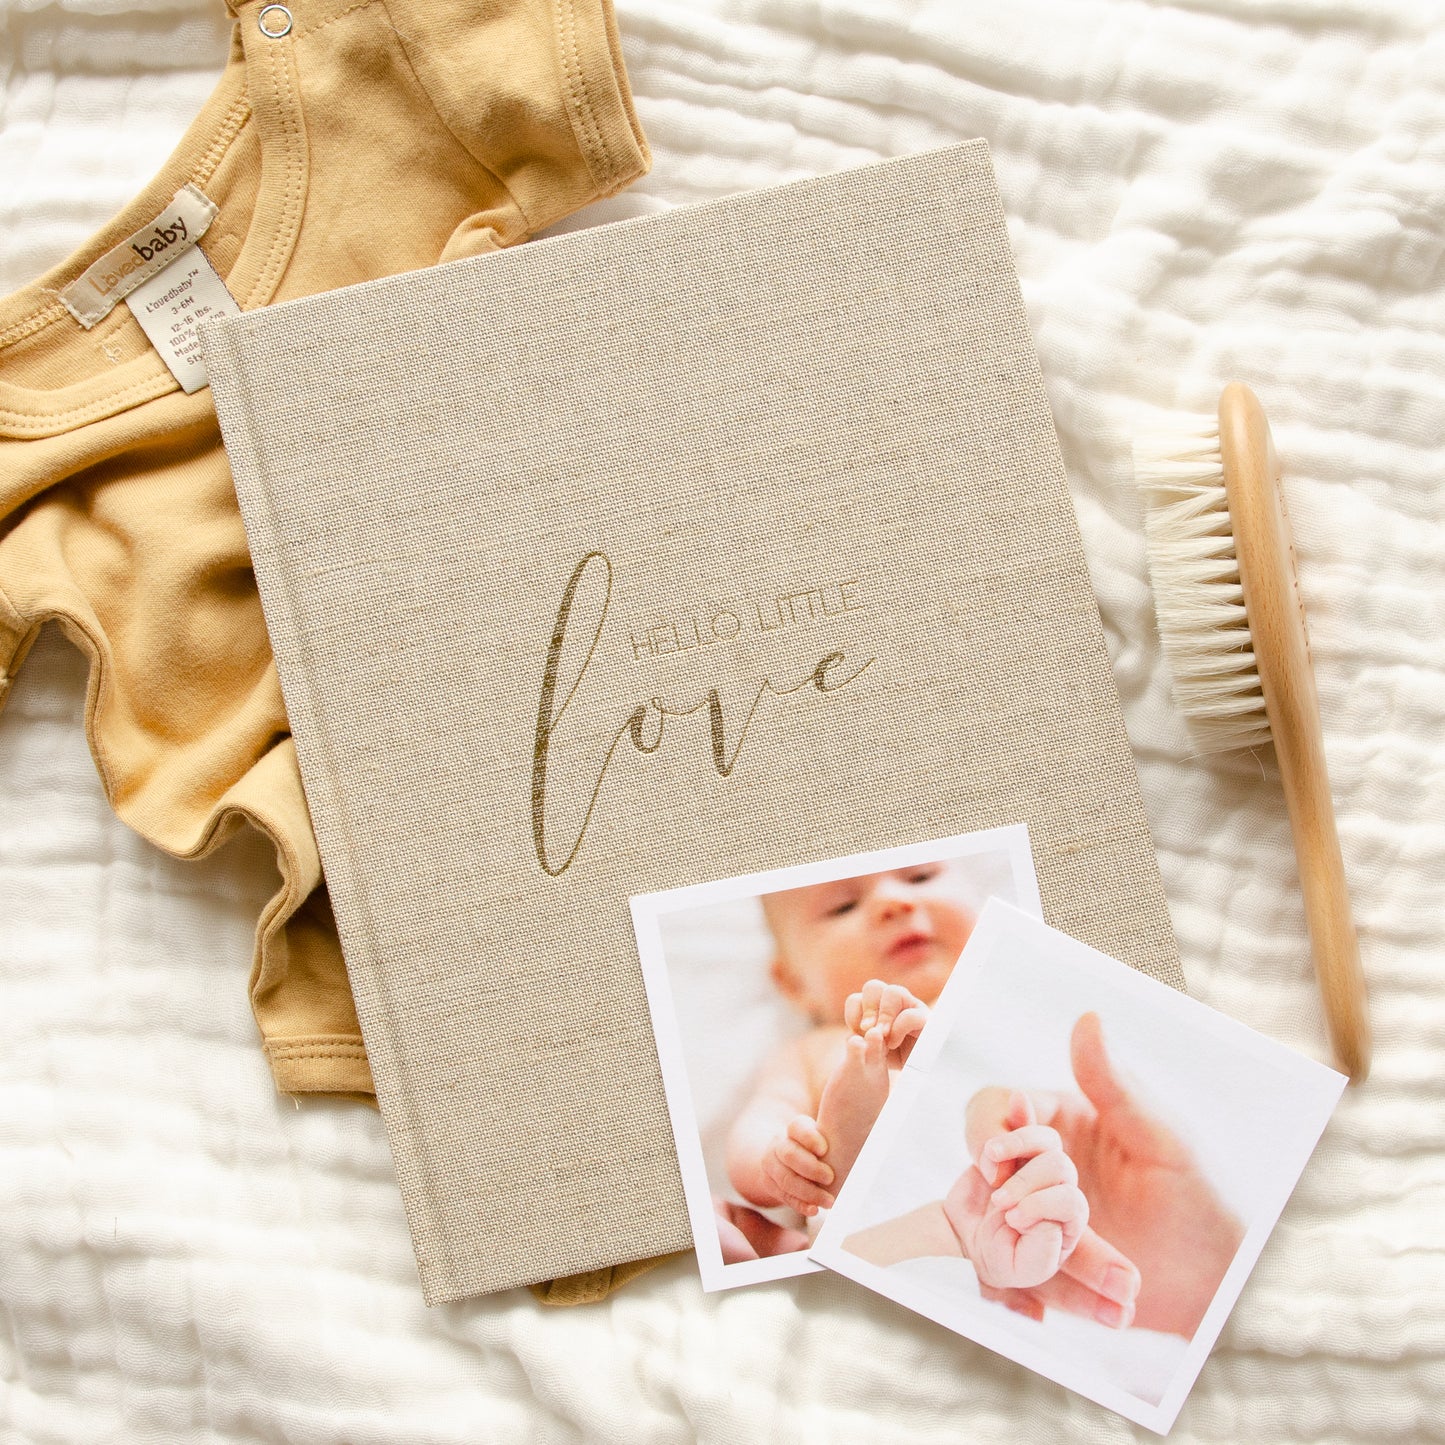 Hello Little Love Baby Memory Book